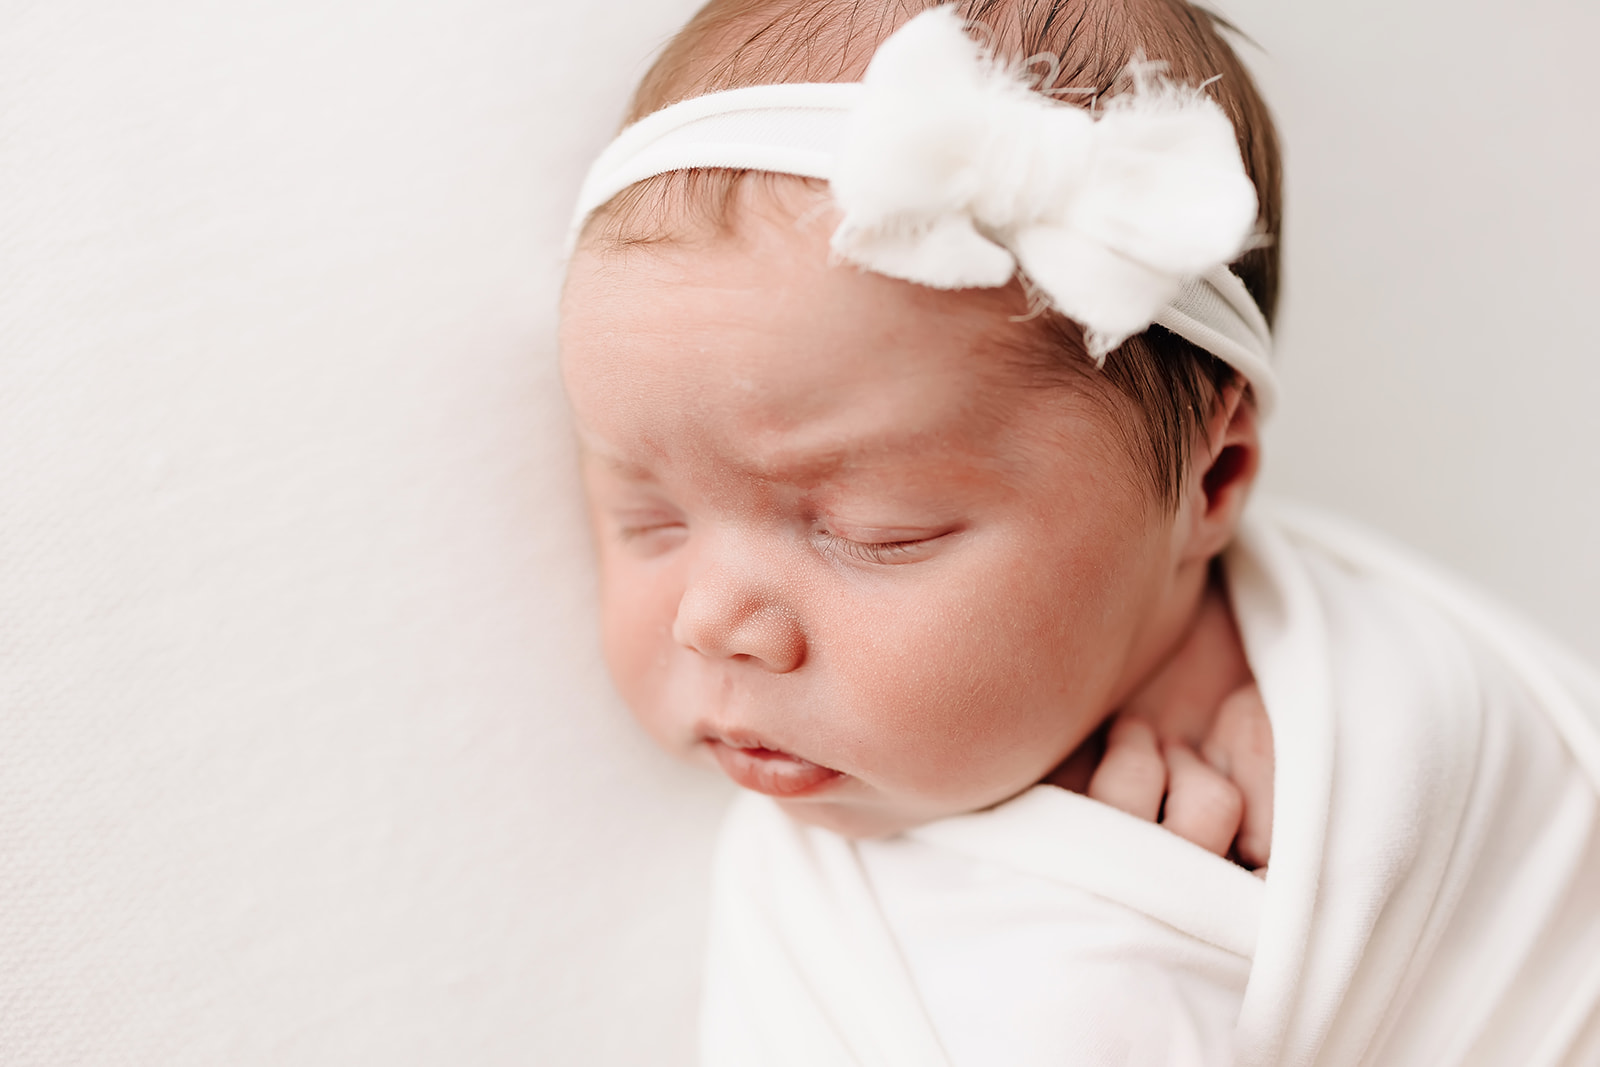 A newborn baby sleeps in a white boy headband